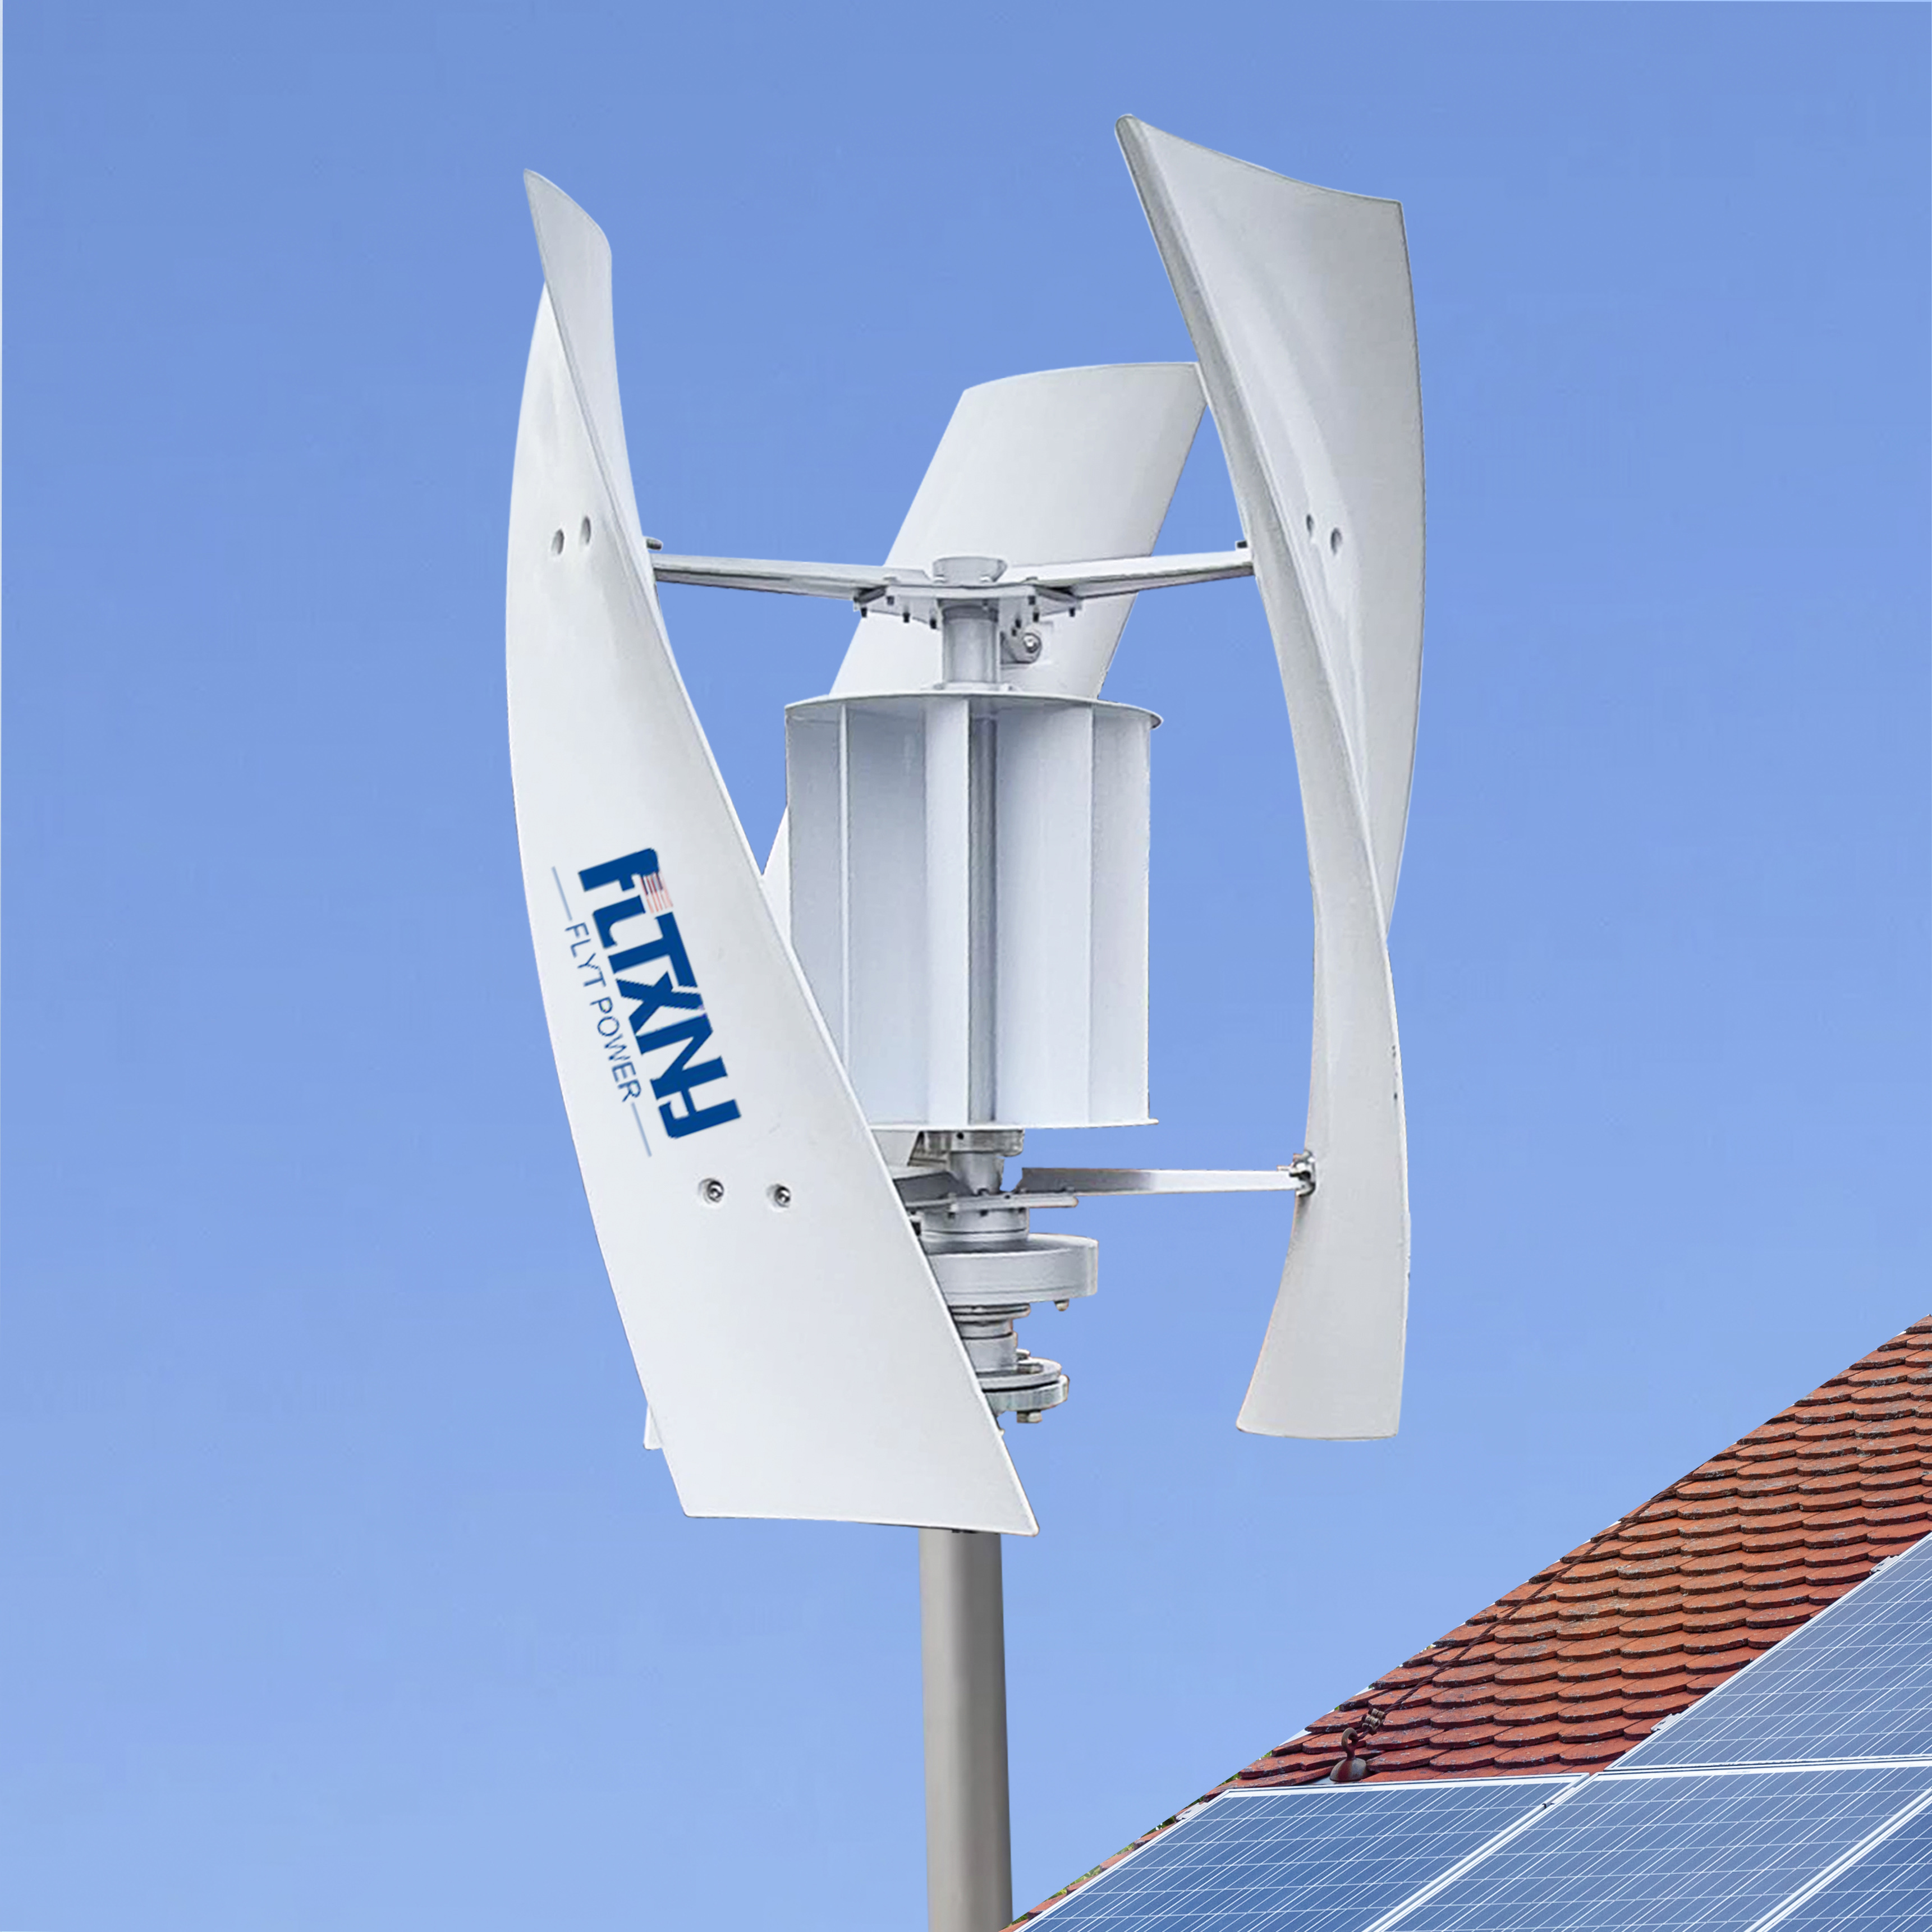 X5 model 1000w 24v wind turbine vertical axis off grid wind generaor Featured Image